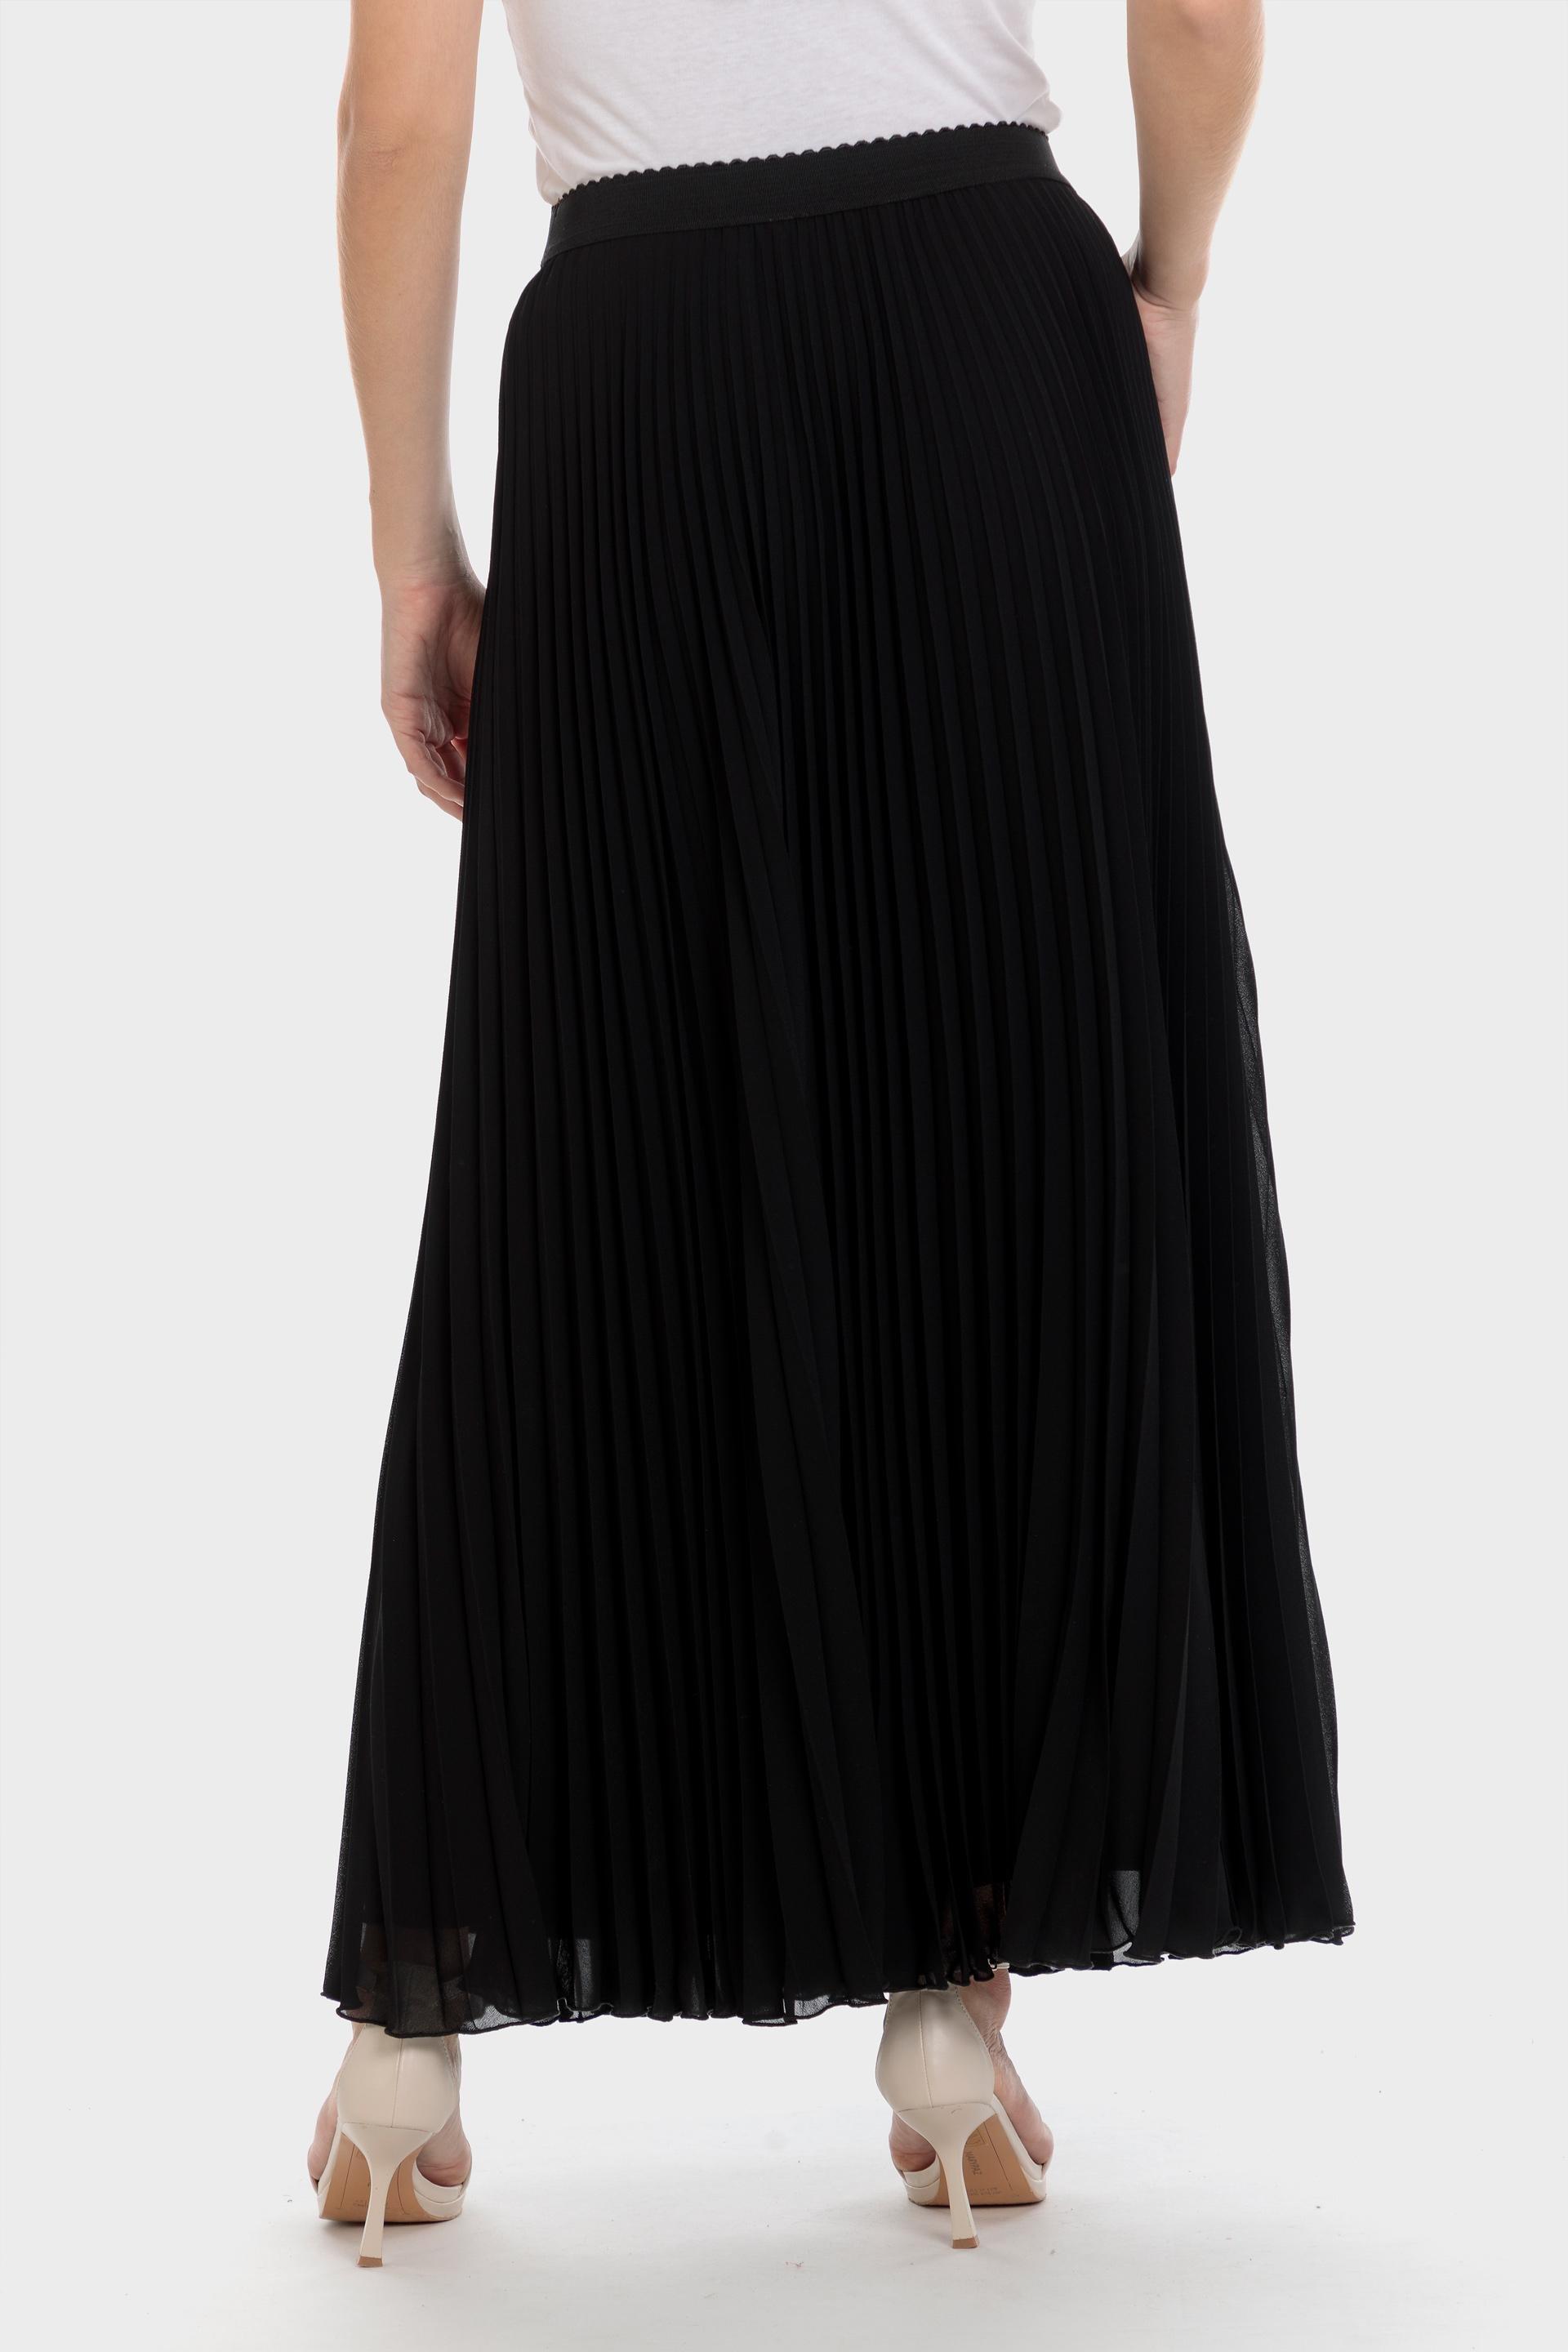 Punt Roma - Black Long Pleated Skirt